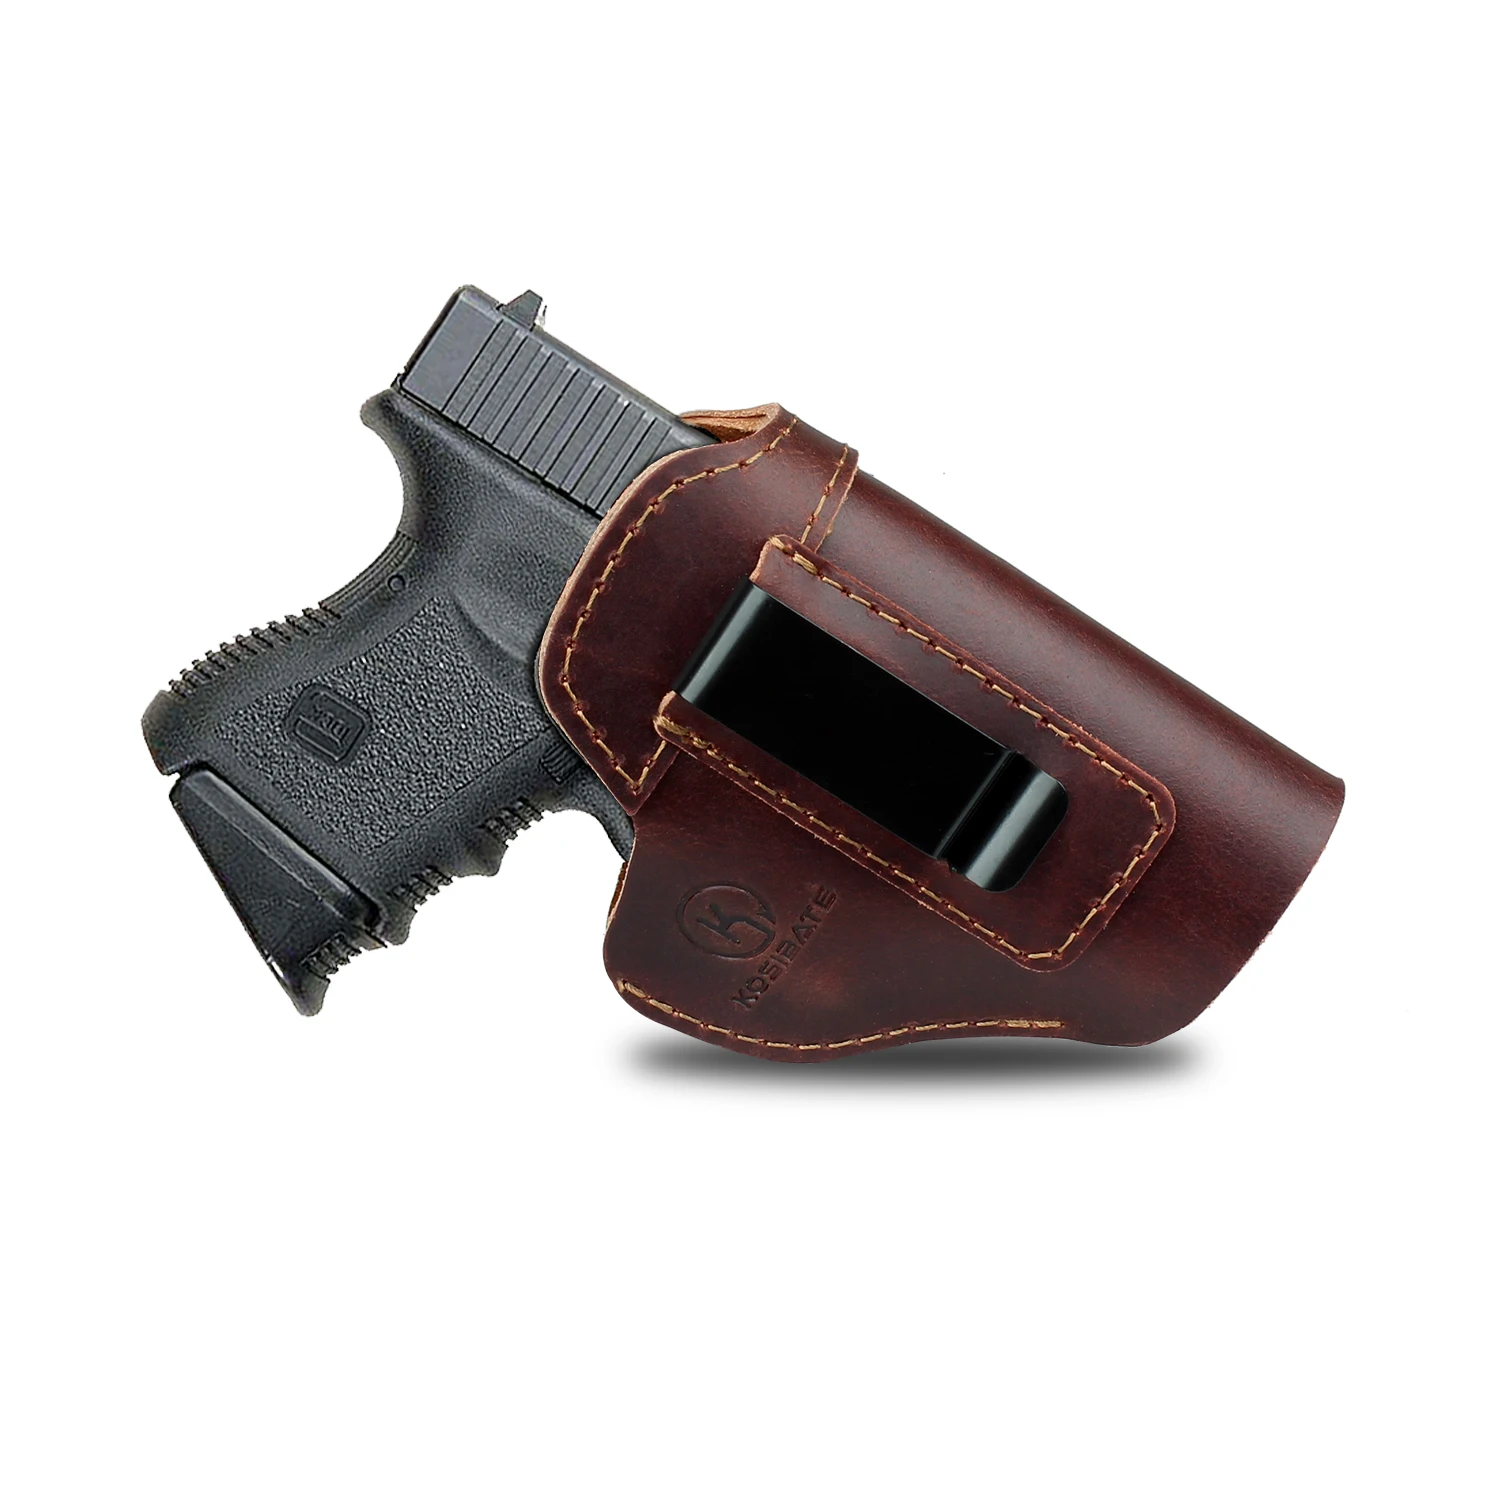 

Custom Leather Glock Gun Holster Soft Iwb Concealed Carry Leather Western Holster For Gun Tactical Genuine Pistol holster, Black brown